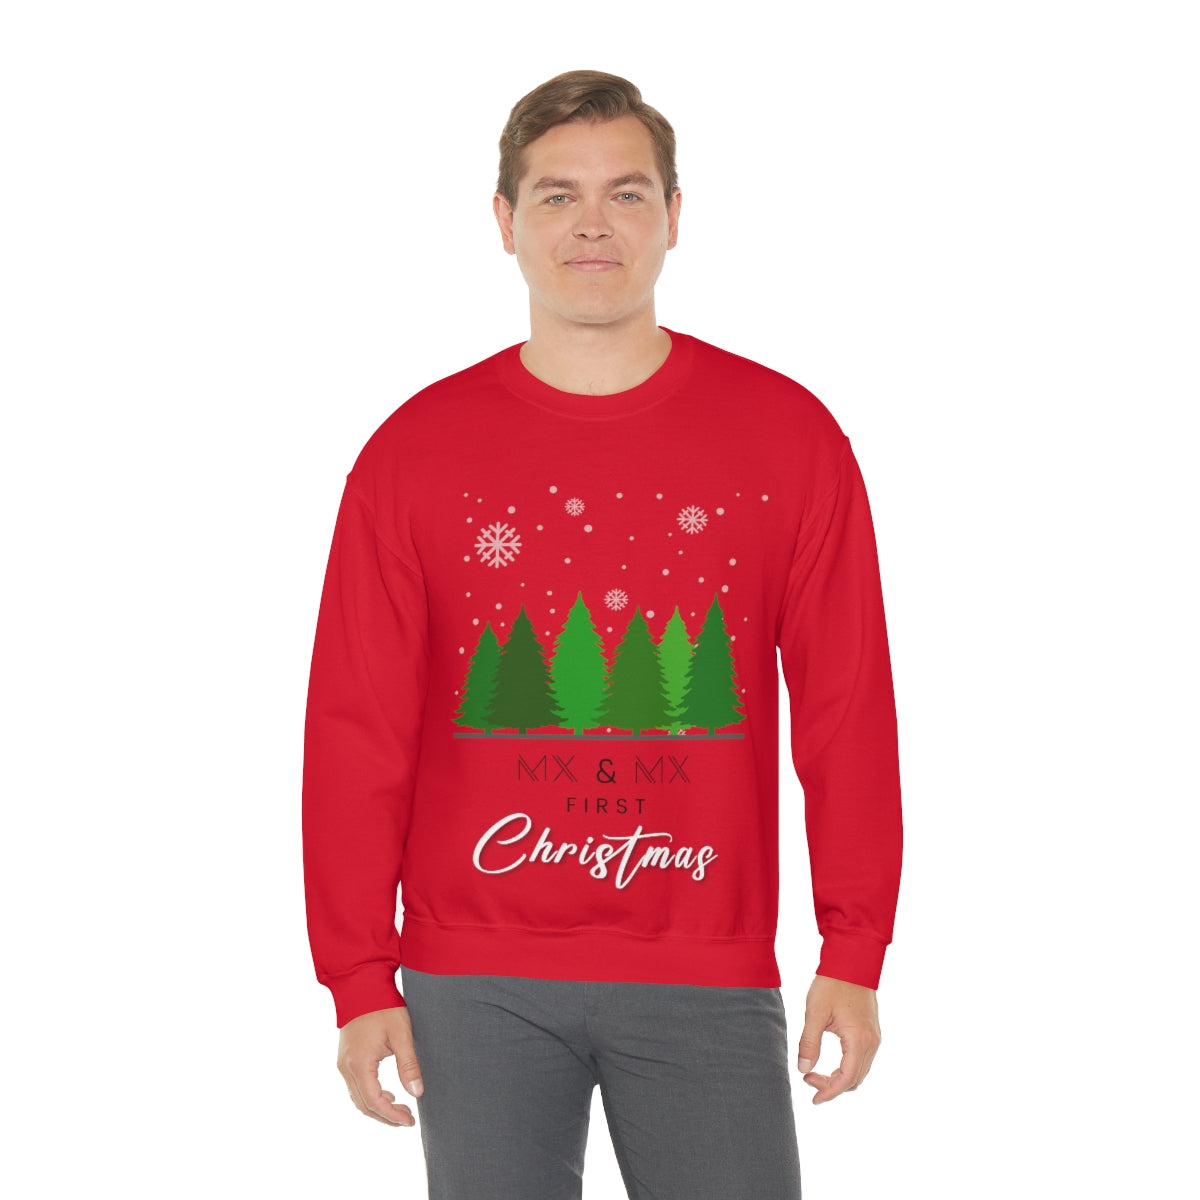 Christmas Unisex Sweatshirts , Sweatshirt , Women Sweatshirt , Men Sweatshirt ,Crewneck Sweatshirt, SANTA’S FAVORITE Mx Printify